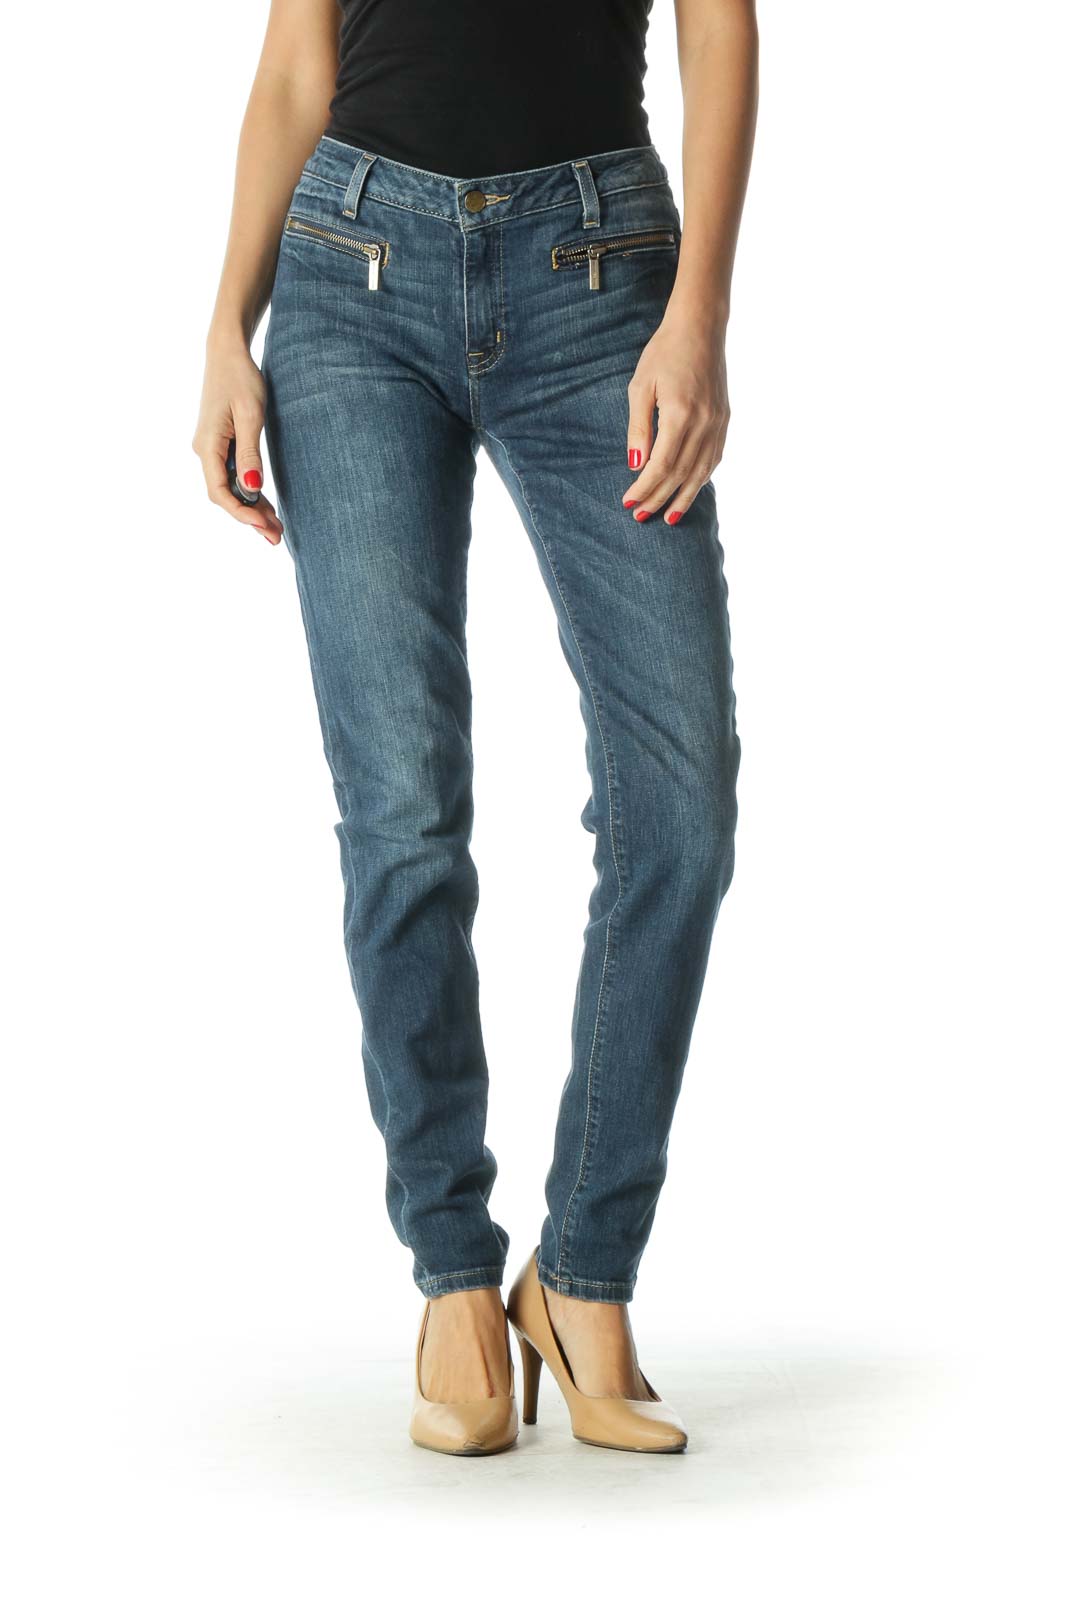 Zippered Pocket Skinny Jeans Front